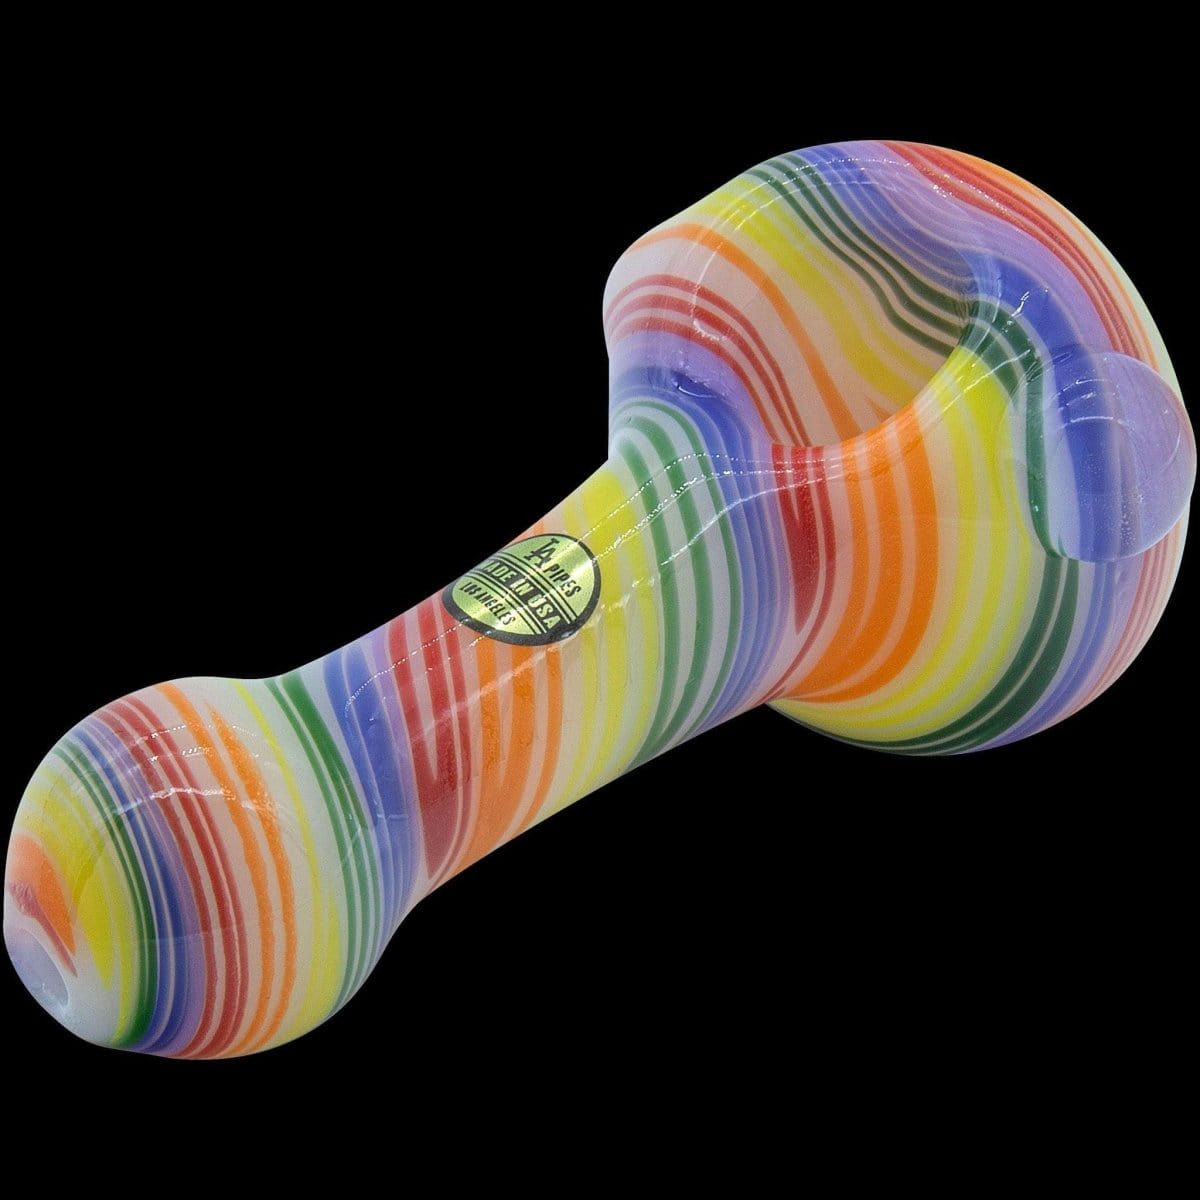 LA Pipes Hand Pipe "Rainbow Spirals" White Glass Pipe